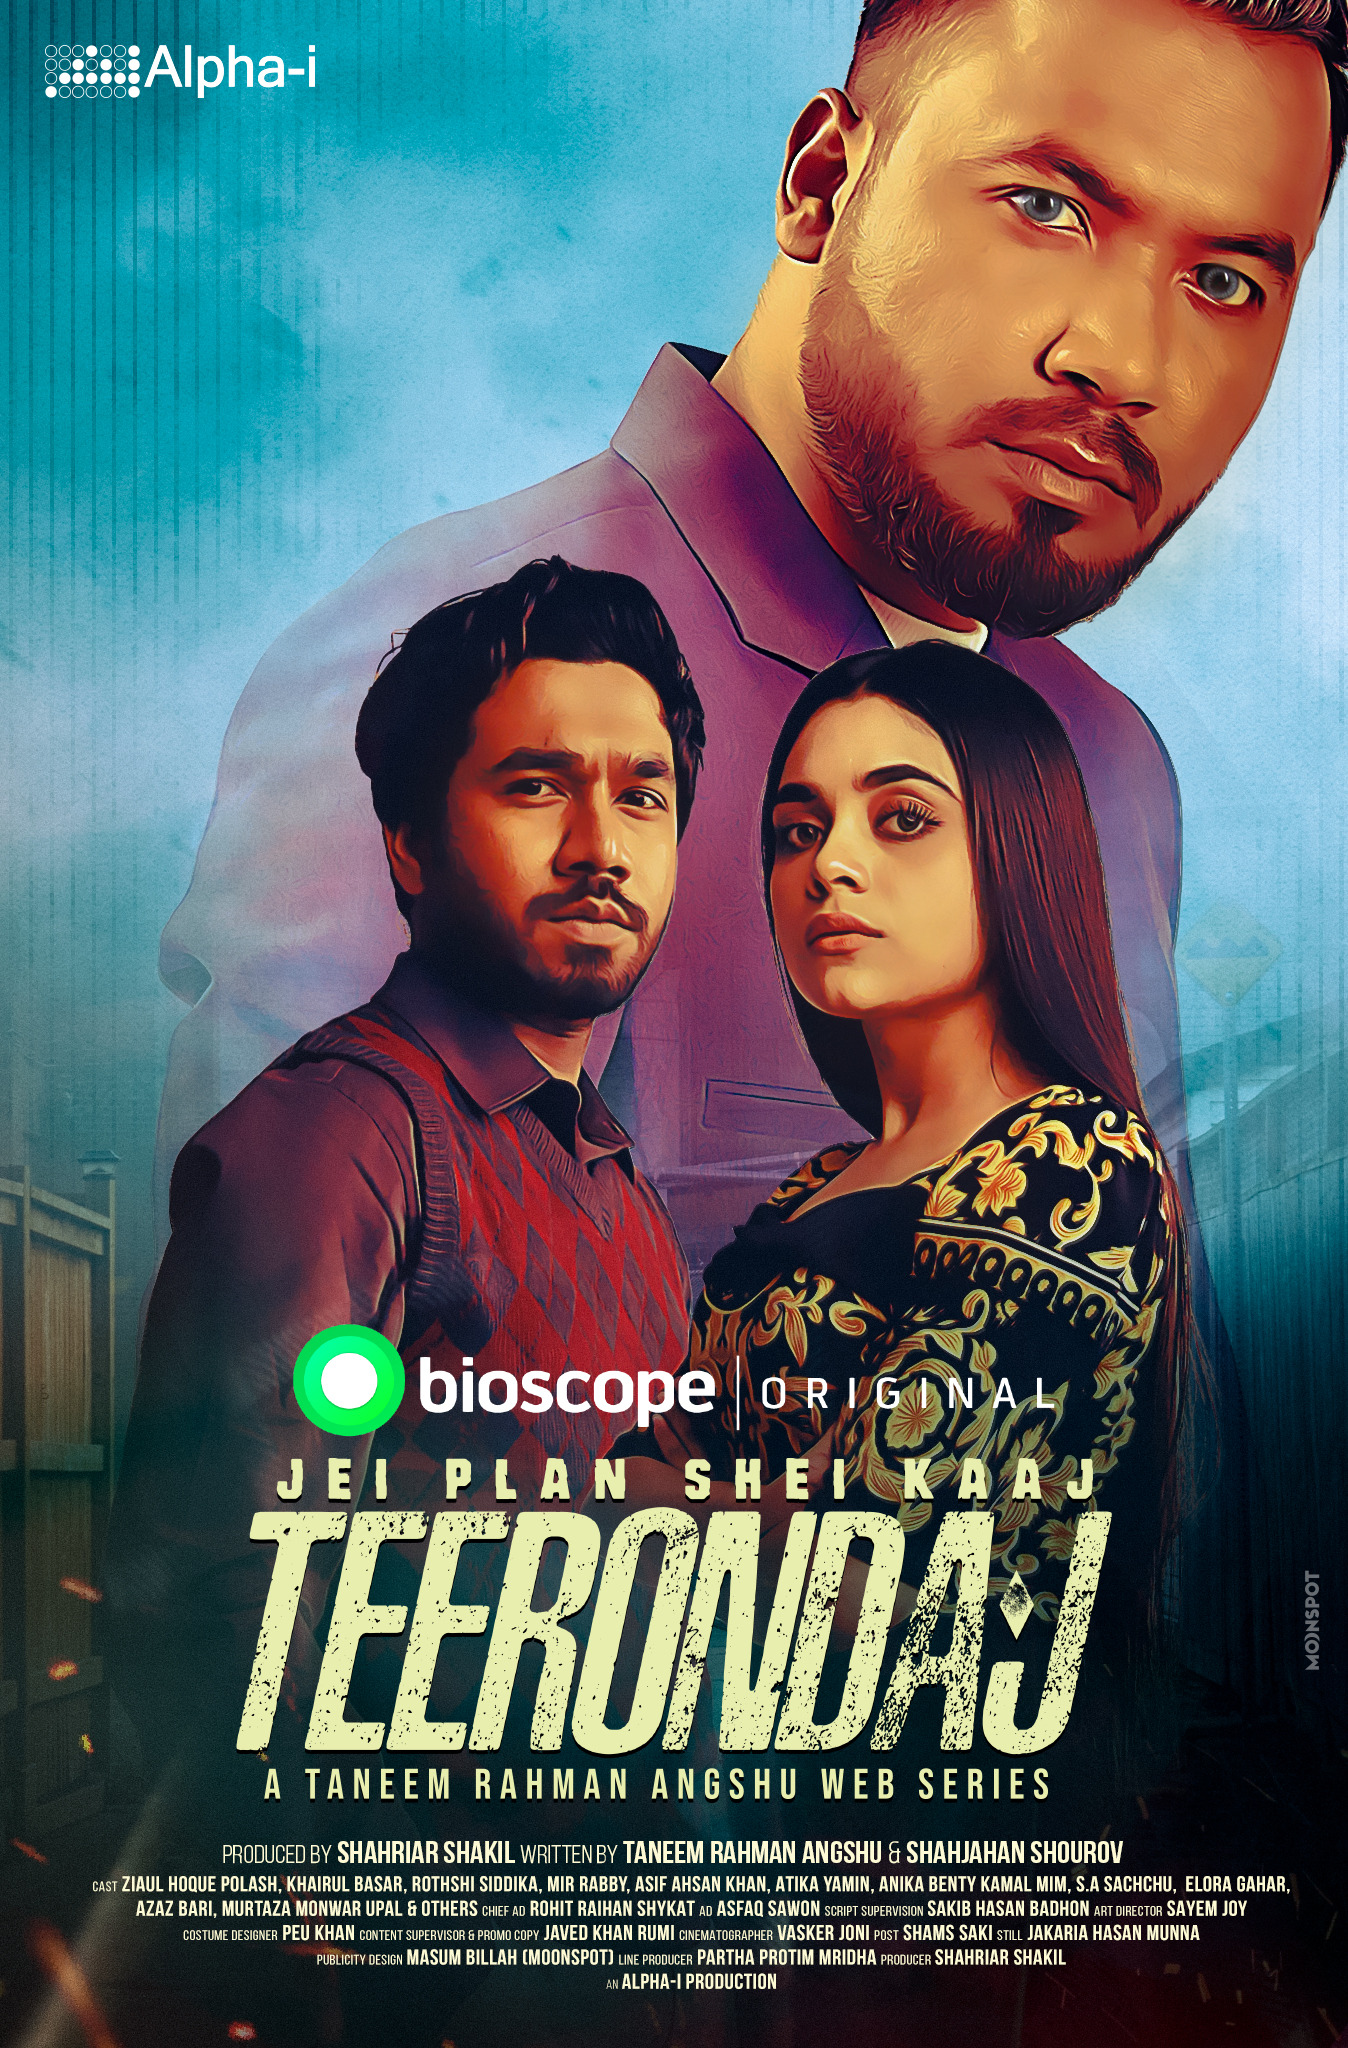 Mega Sized TV Poster Image for Teerondaj (#4 of 4)